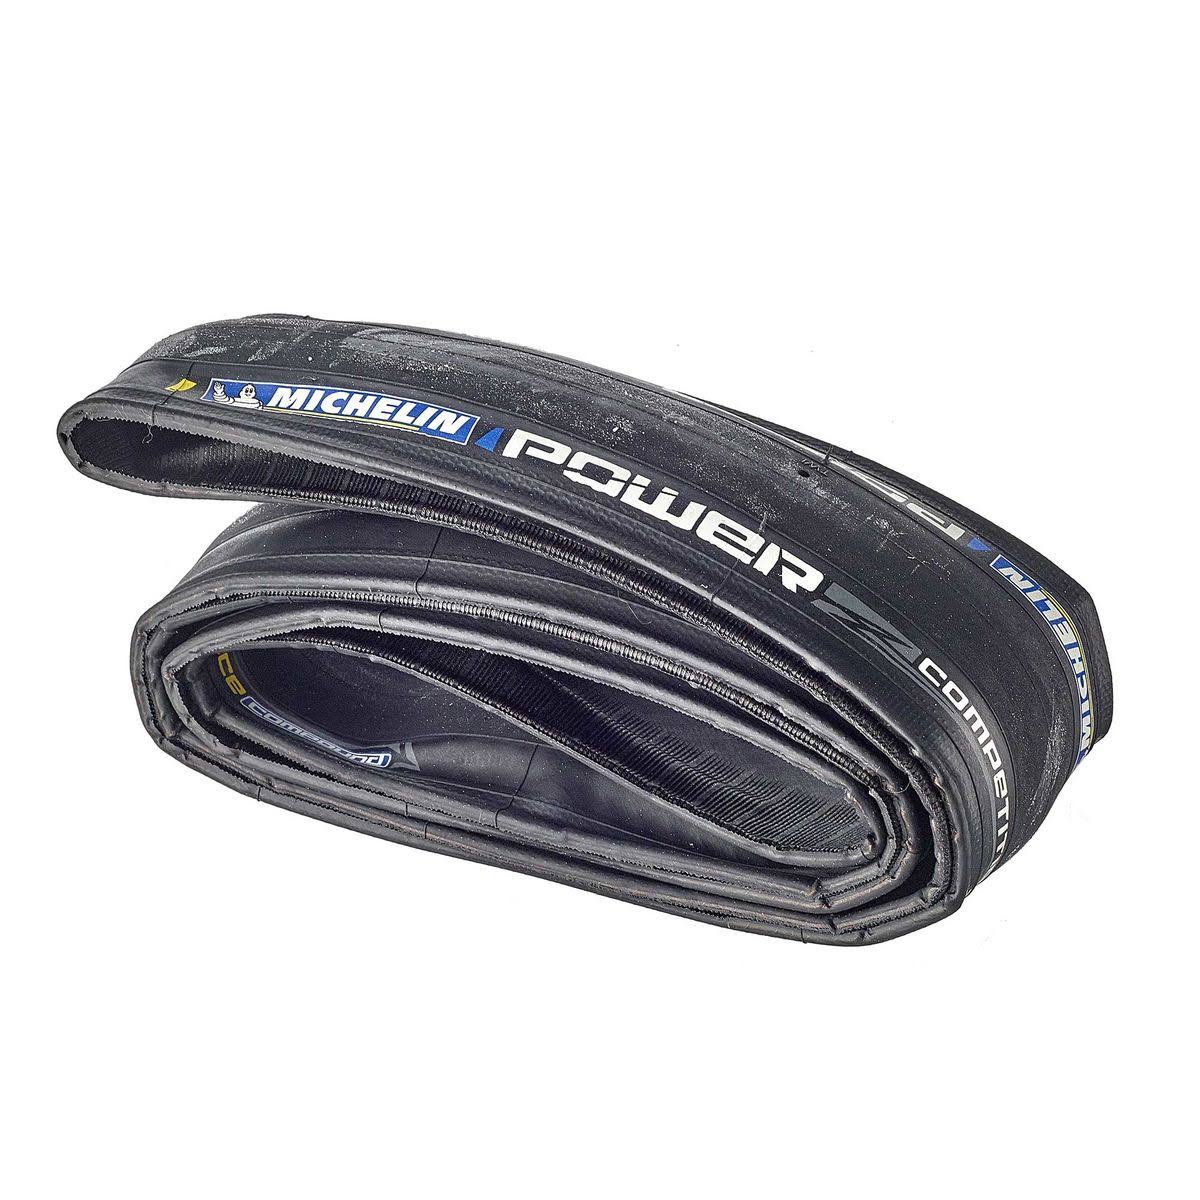 Michelin Power Competition Tire - Clincher Black, 700c x 25mm